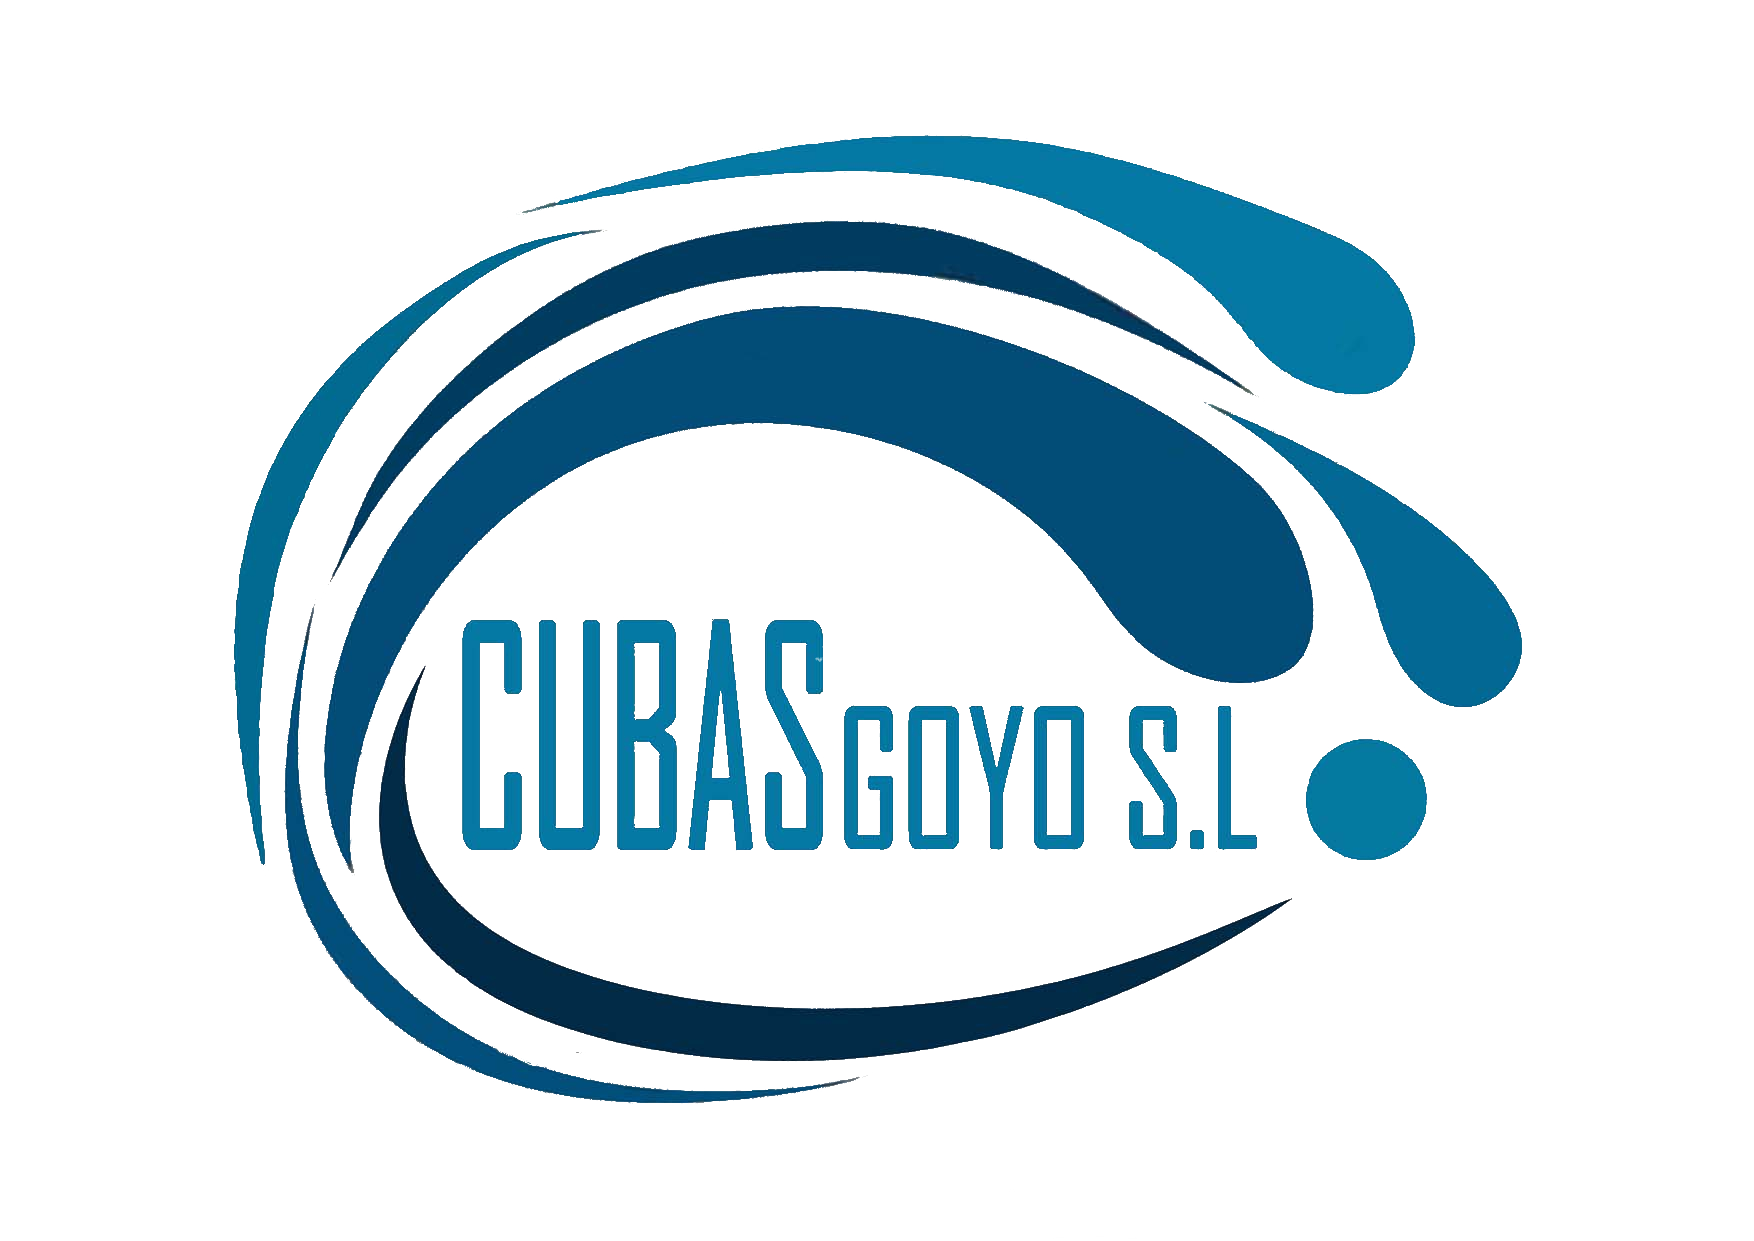 CUBASGOYO S.L